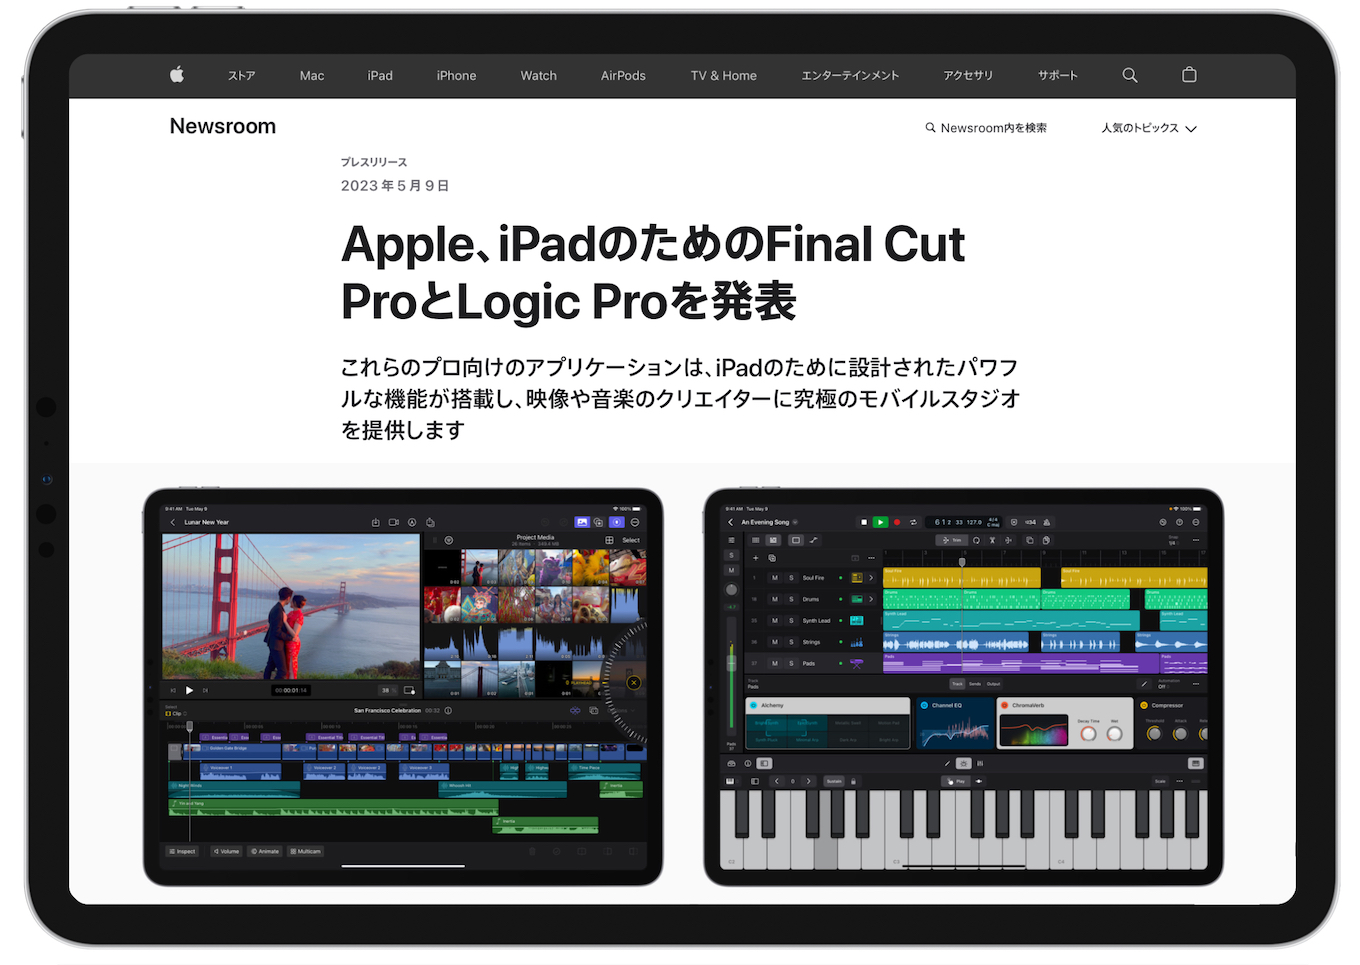 Final Cut ProとLogic ProがiPadでも利用可能に。